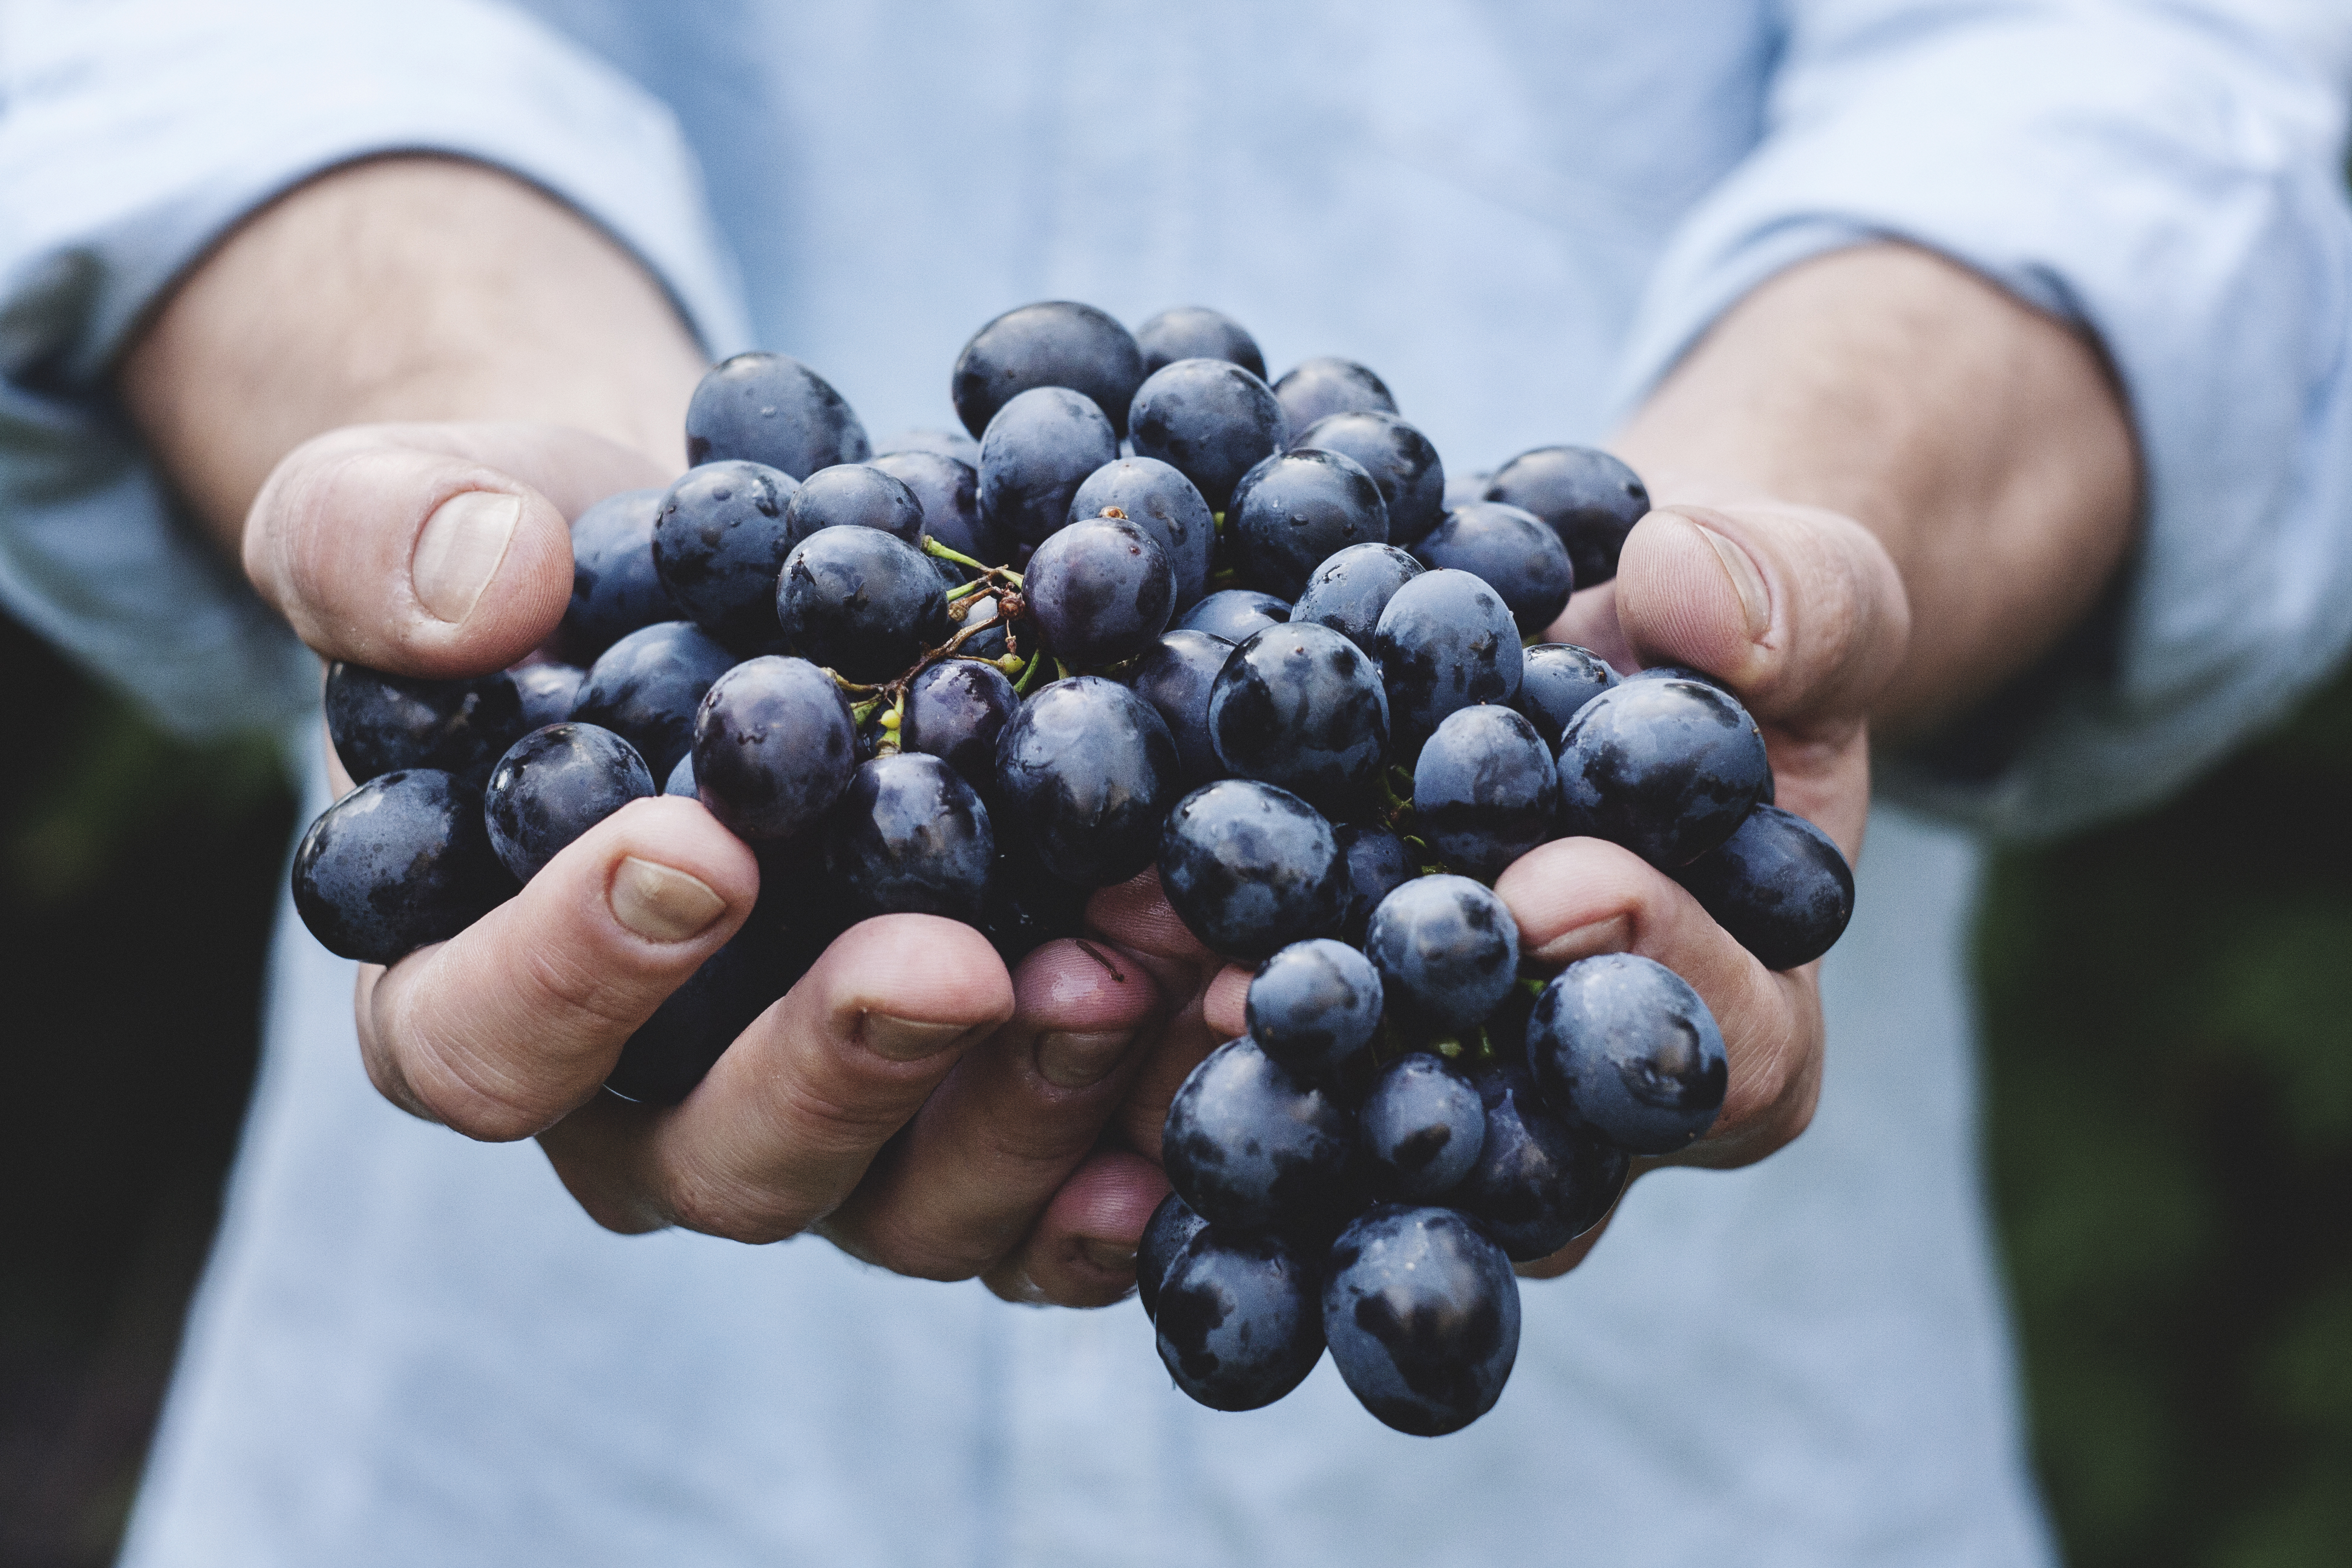 farmer's hands purple grapes